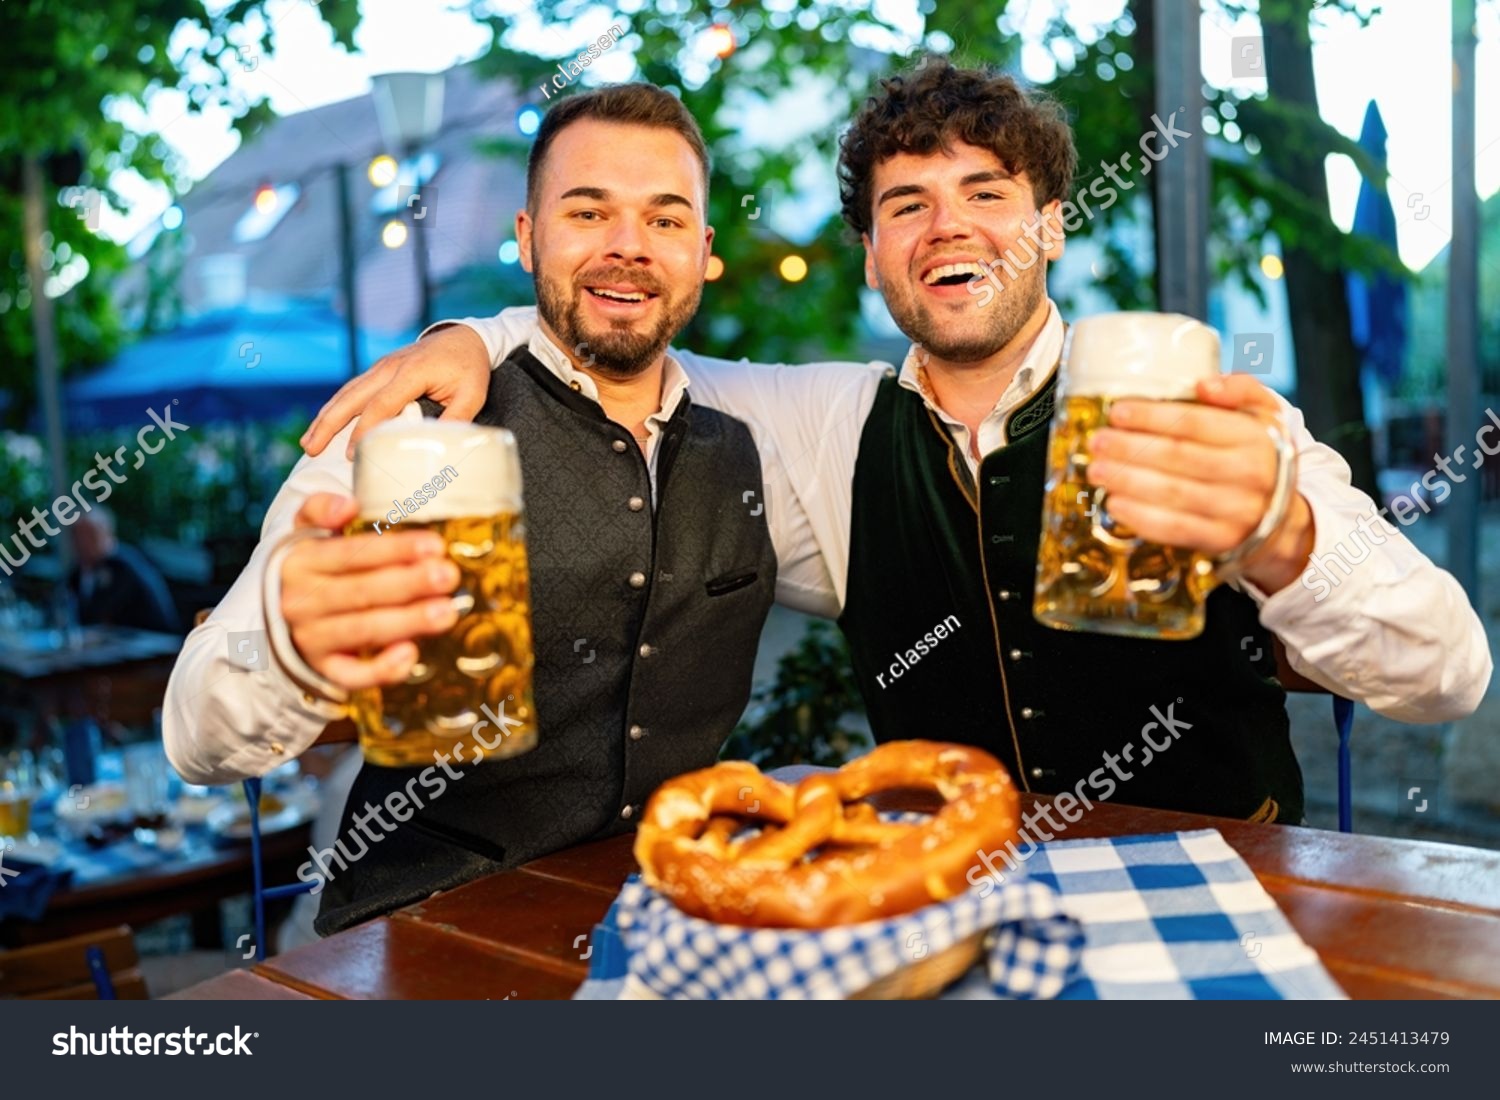 In Beer garden or Oktoberfest - Happy friends in Tracht, Dirndl and Lederhosen drinking fresh beer in mugs at Bavaria, Germany #2451413479